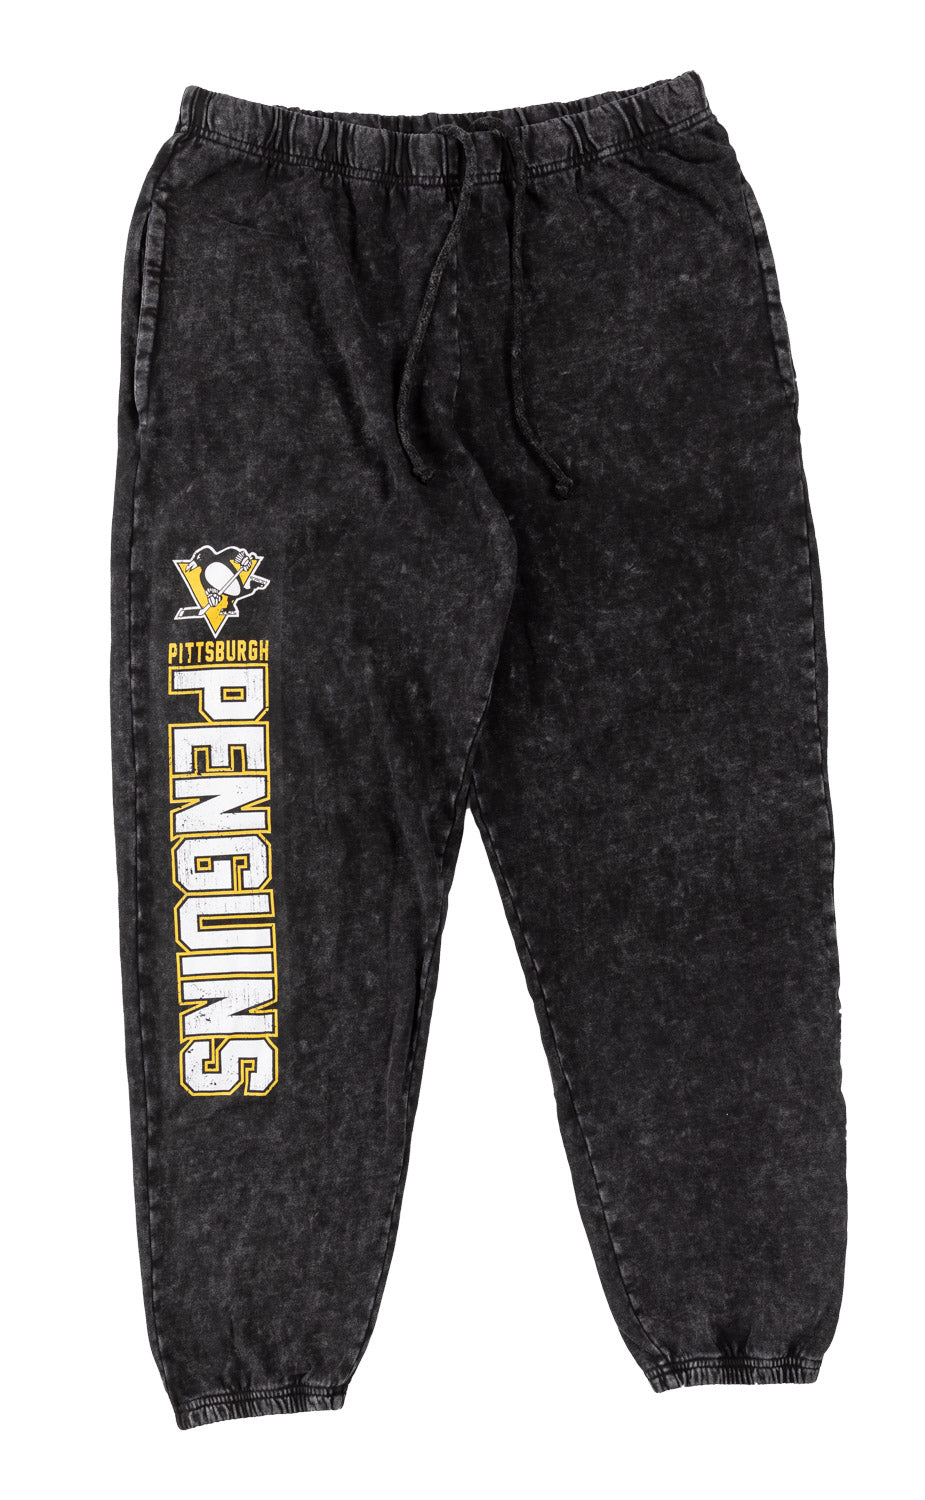 Official licensed NHL Pittsburgh Penguins Acid Wash Joggers